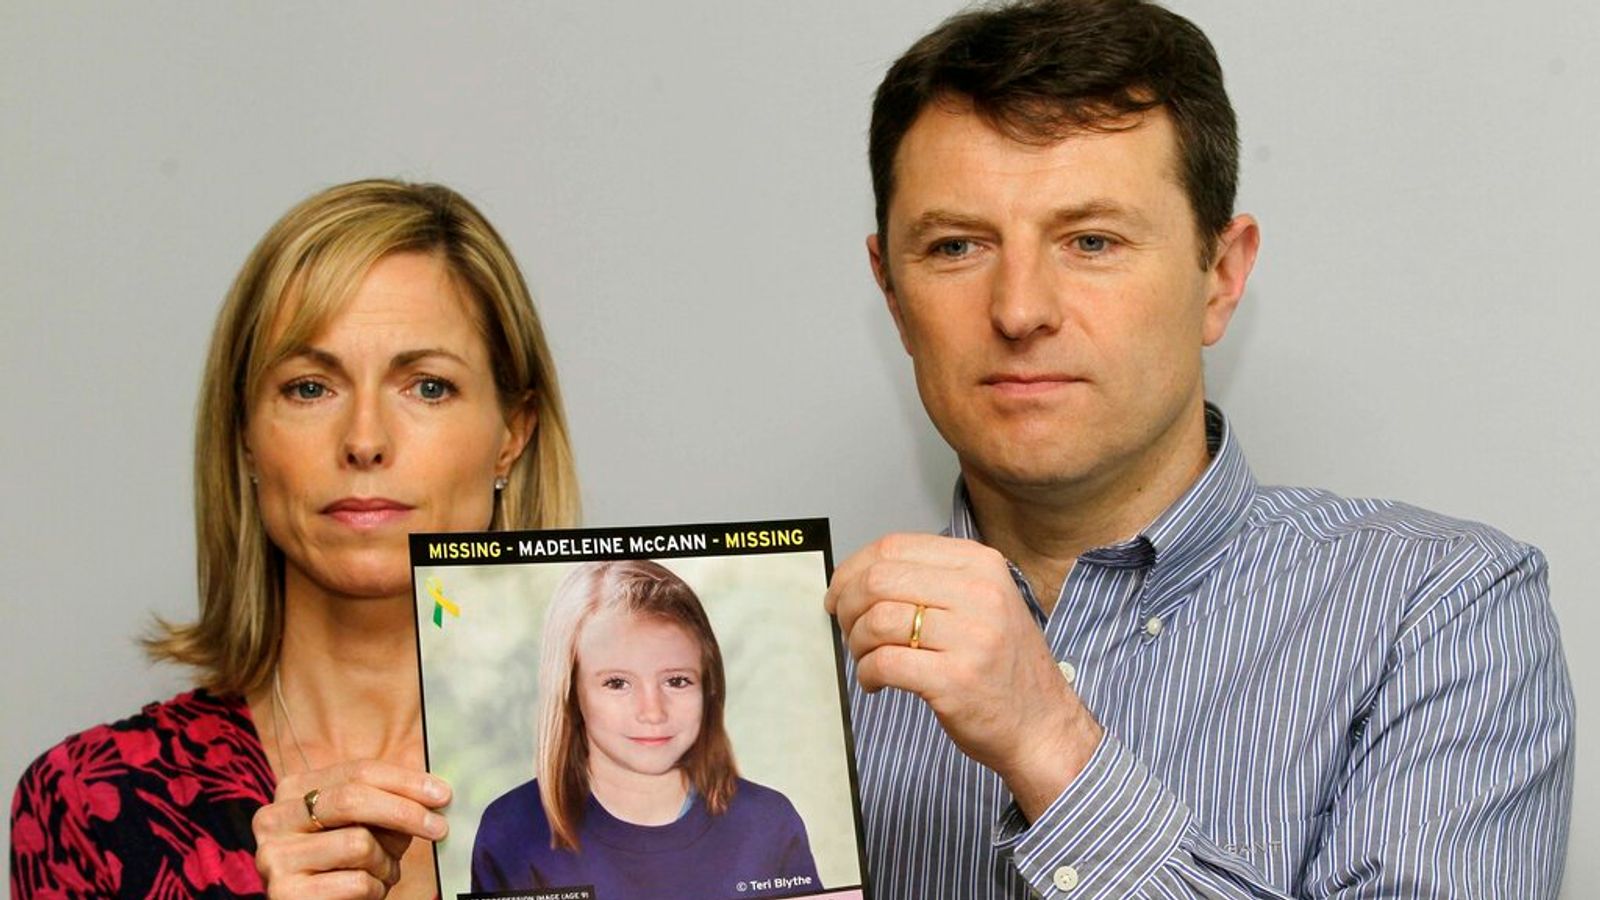 McCann's parents lose legal battle over detective's accusations | World News | Sky News